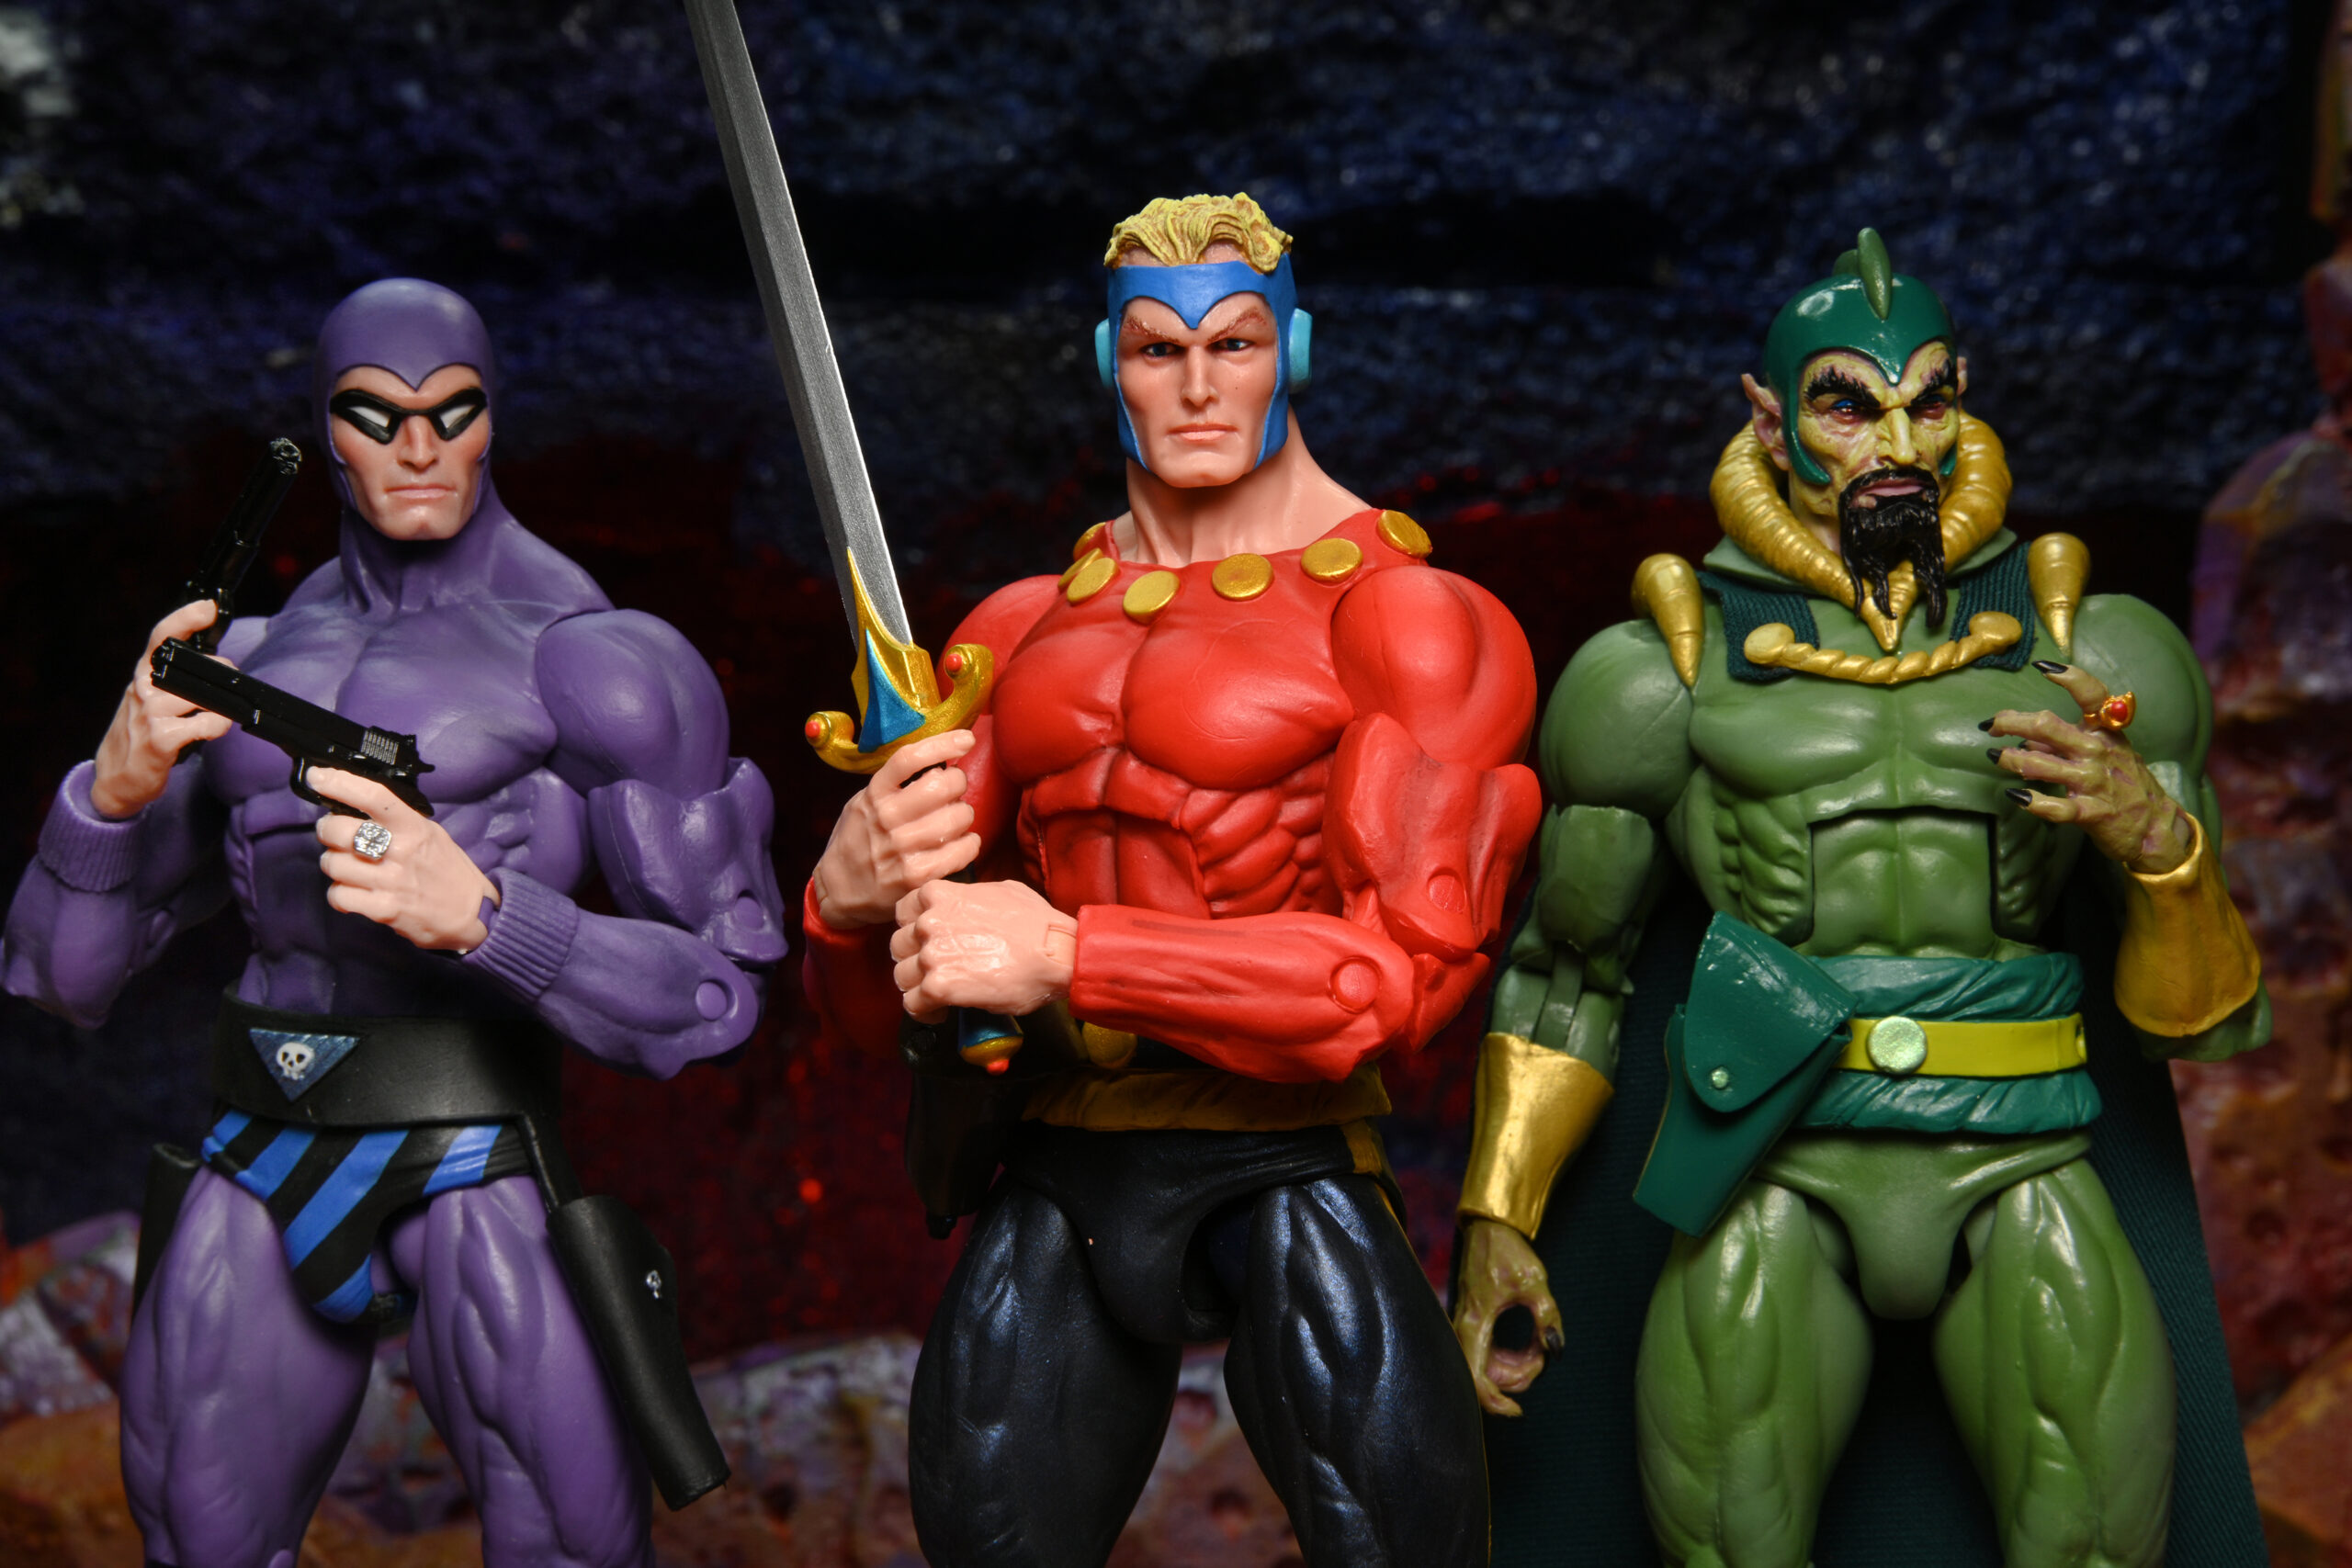 King Features - 7" Scale Action Figure - Original Superheroes Series 1 Assortment (3) NECA42612 72108